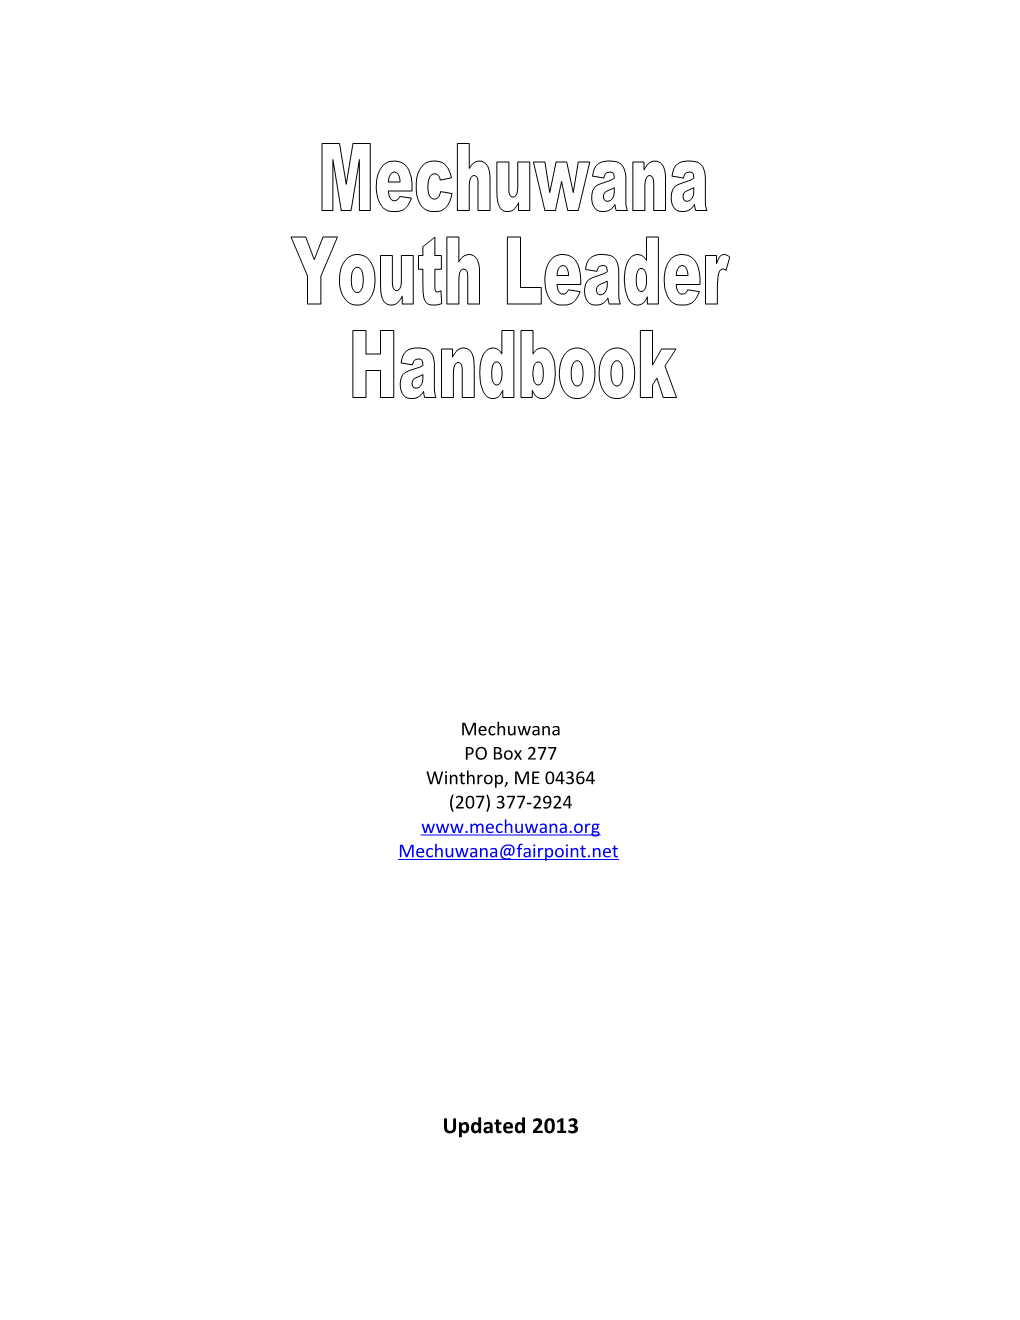 Introduction and History of Mechuwana